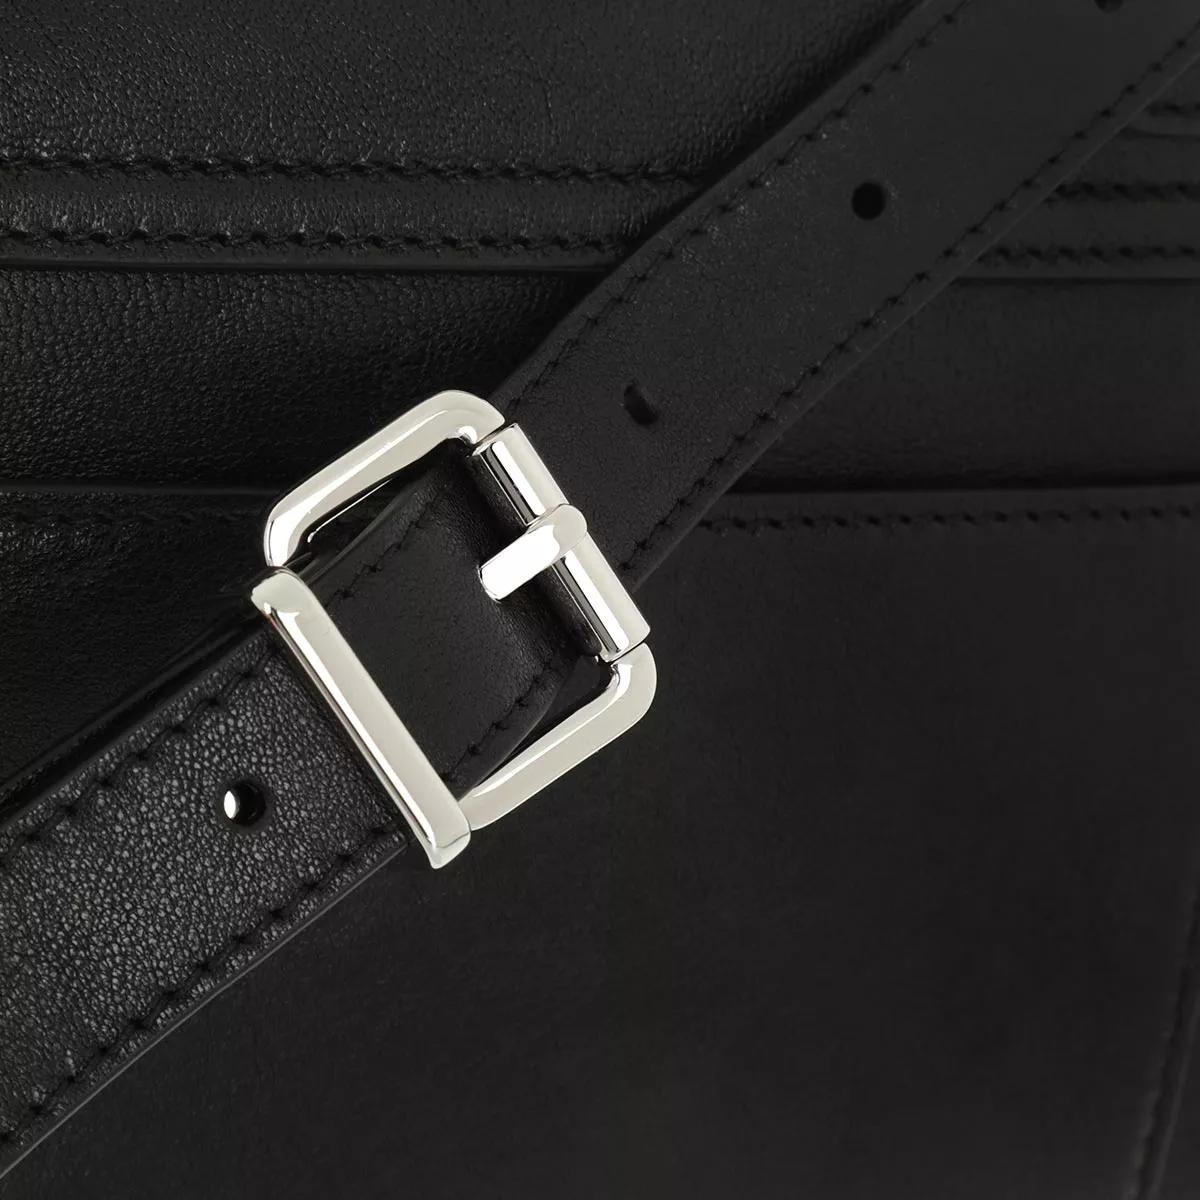 Proenza Schouler PS1 Tiny Bag in Black